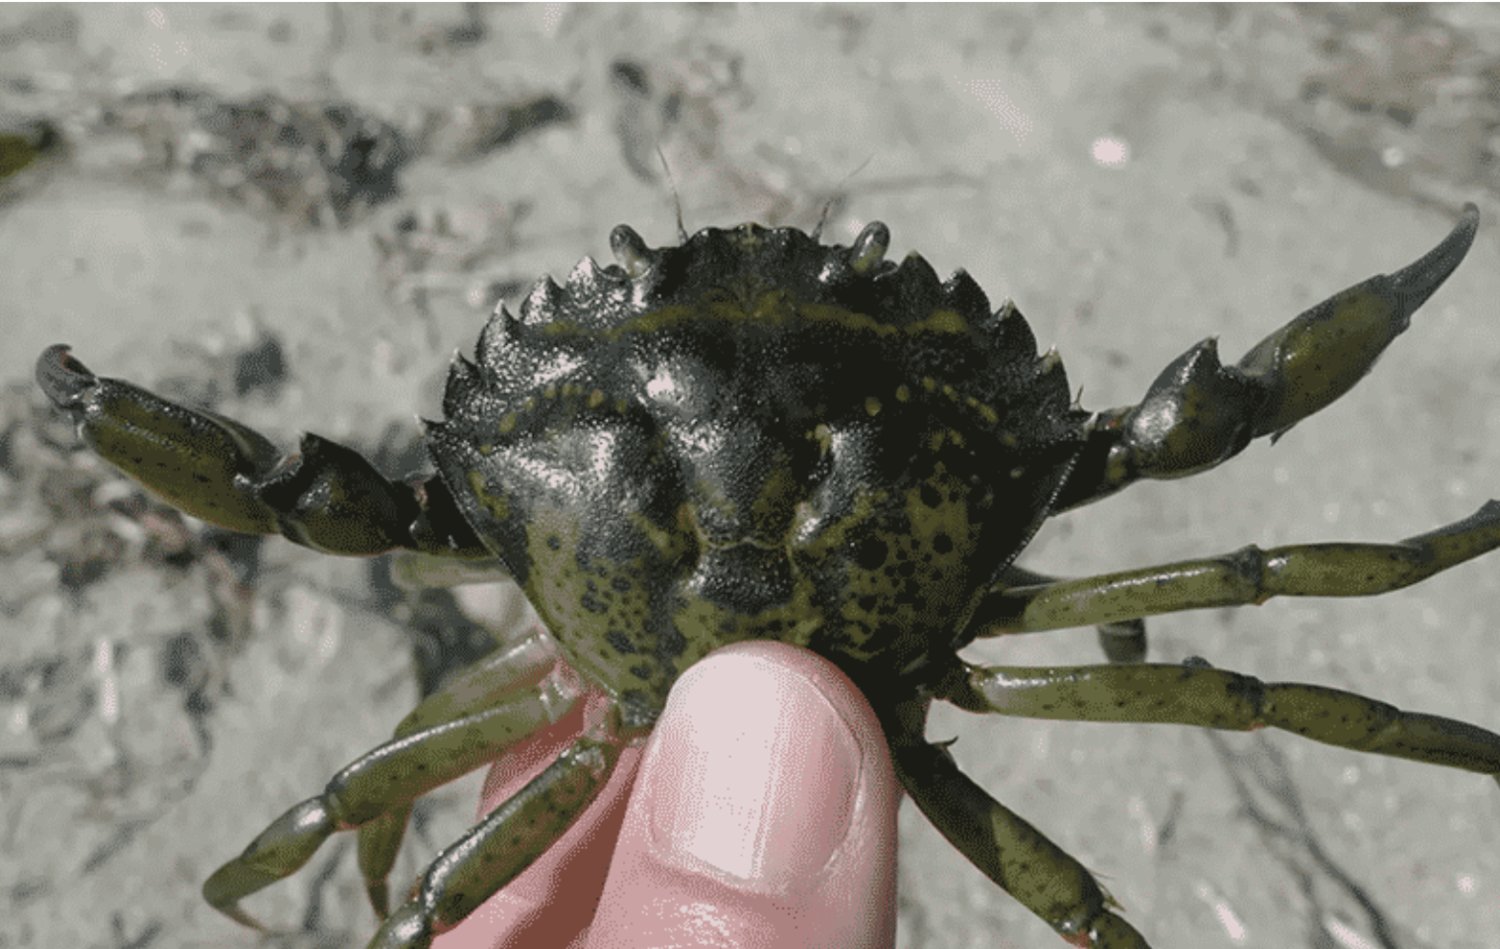 The invasive green crab.